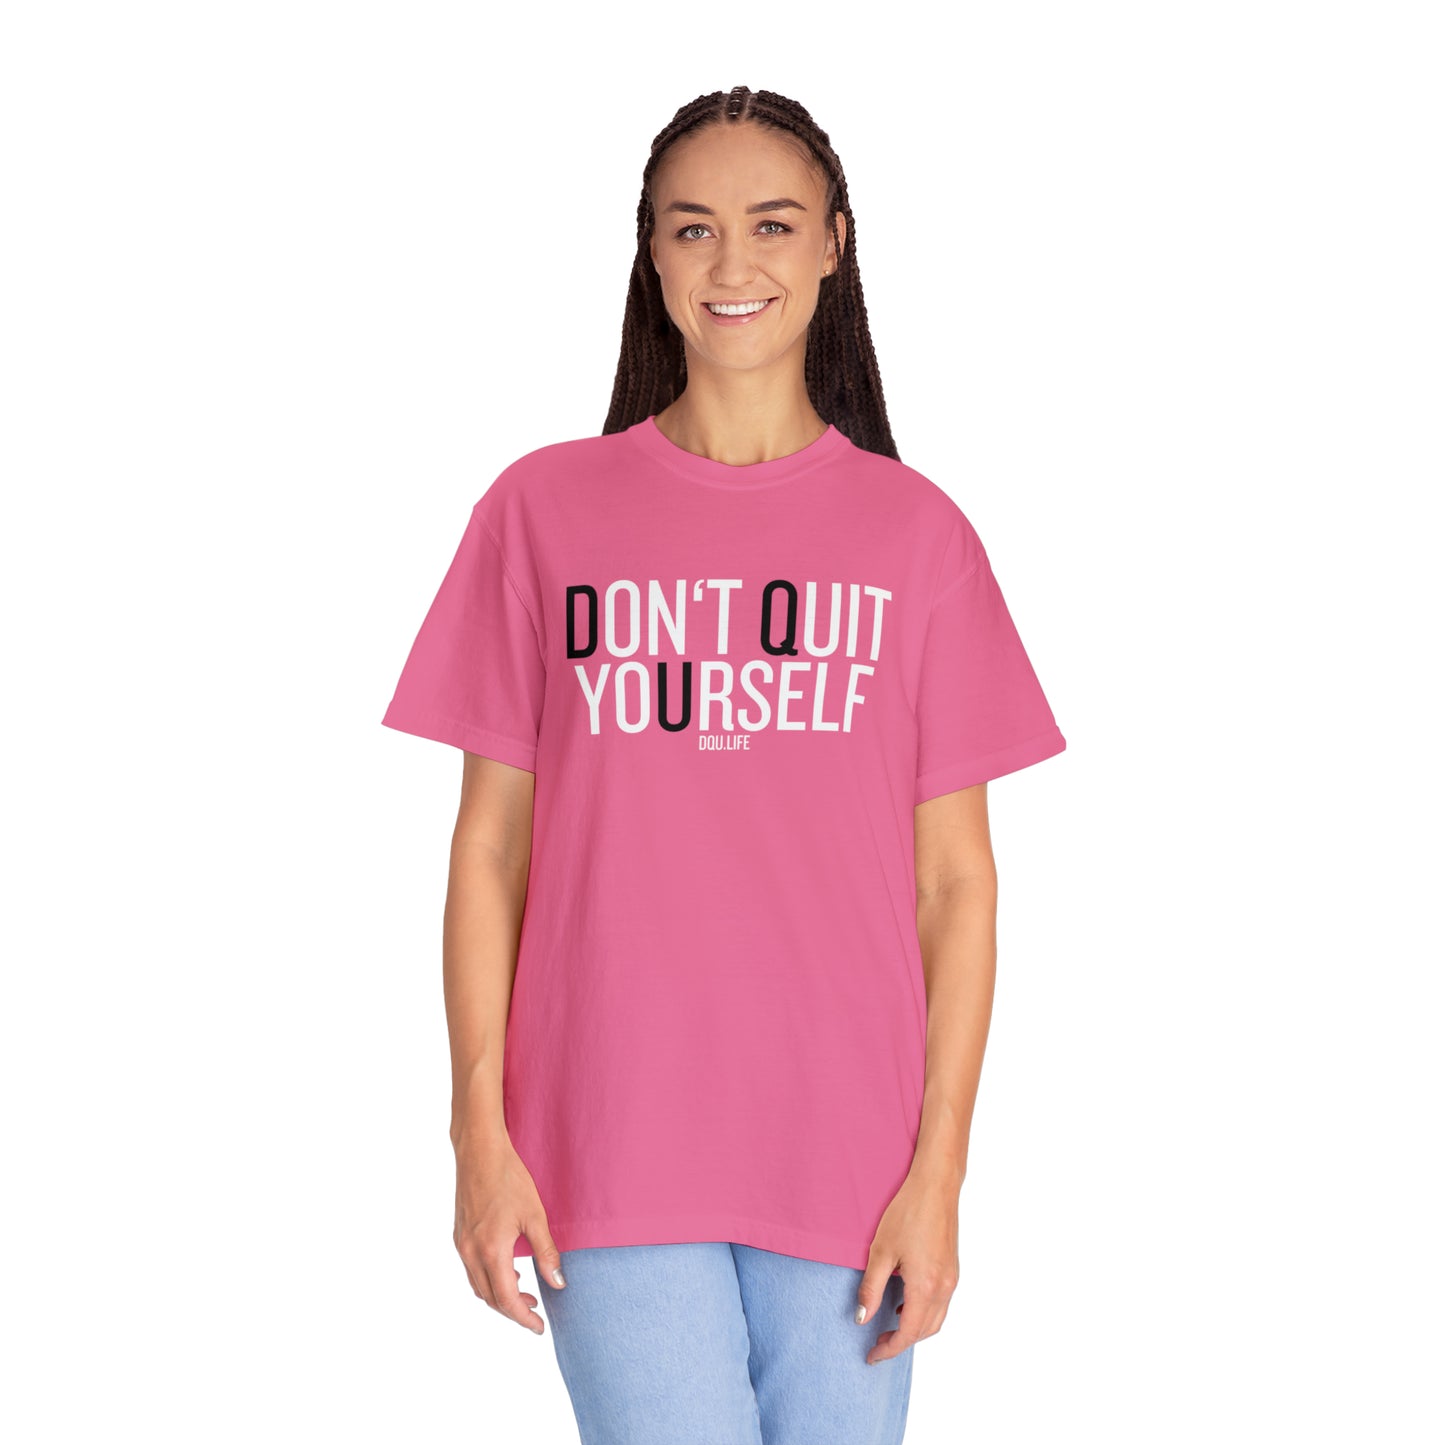 PINK DQU COMFORT COLORS Unisex Garment-Dyed T-shirt